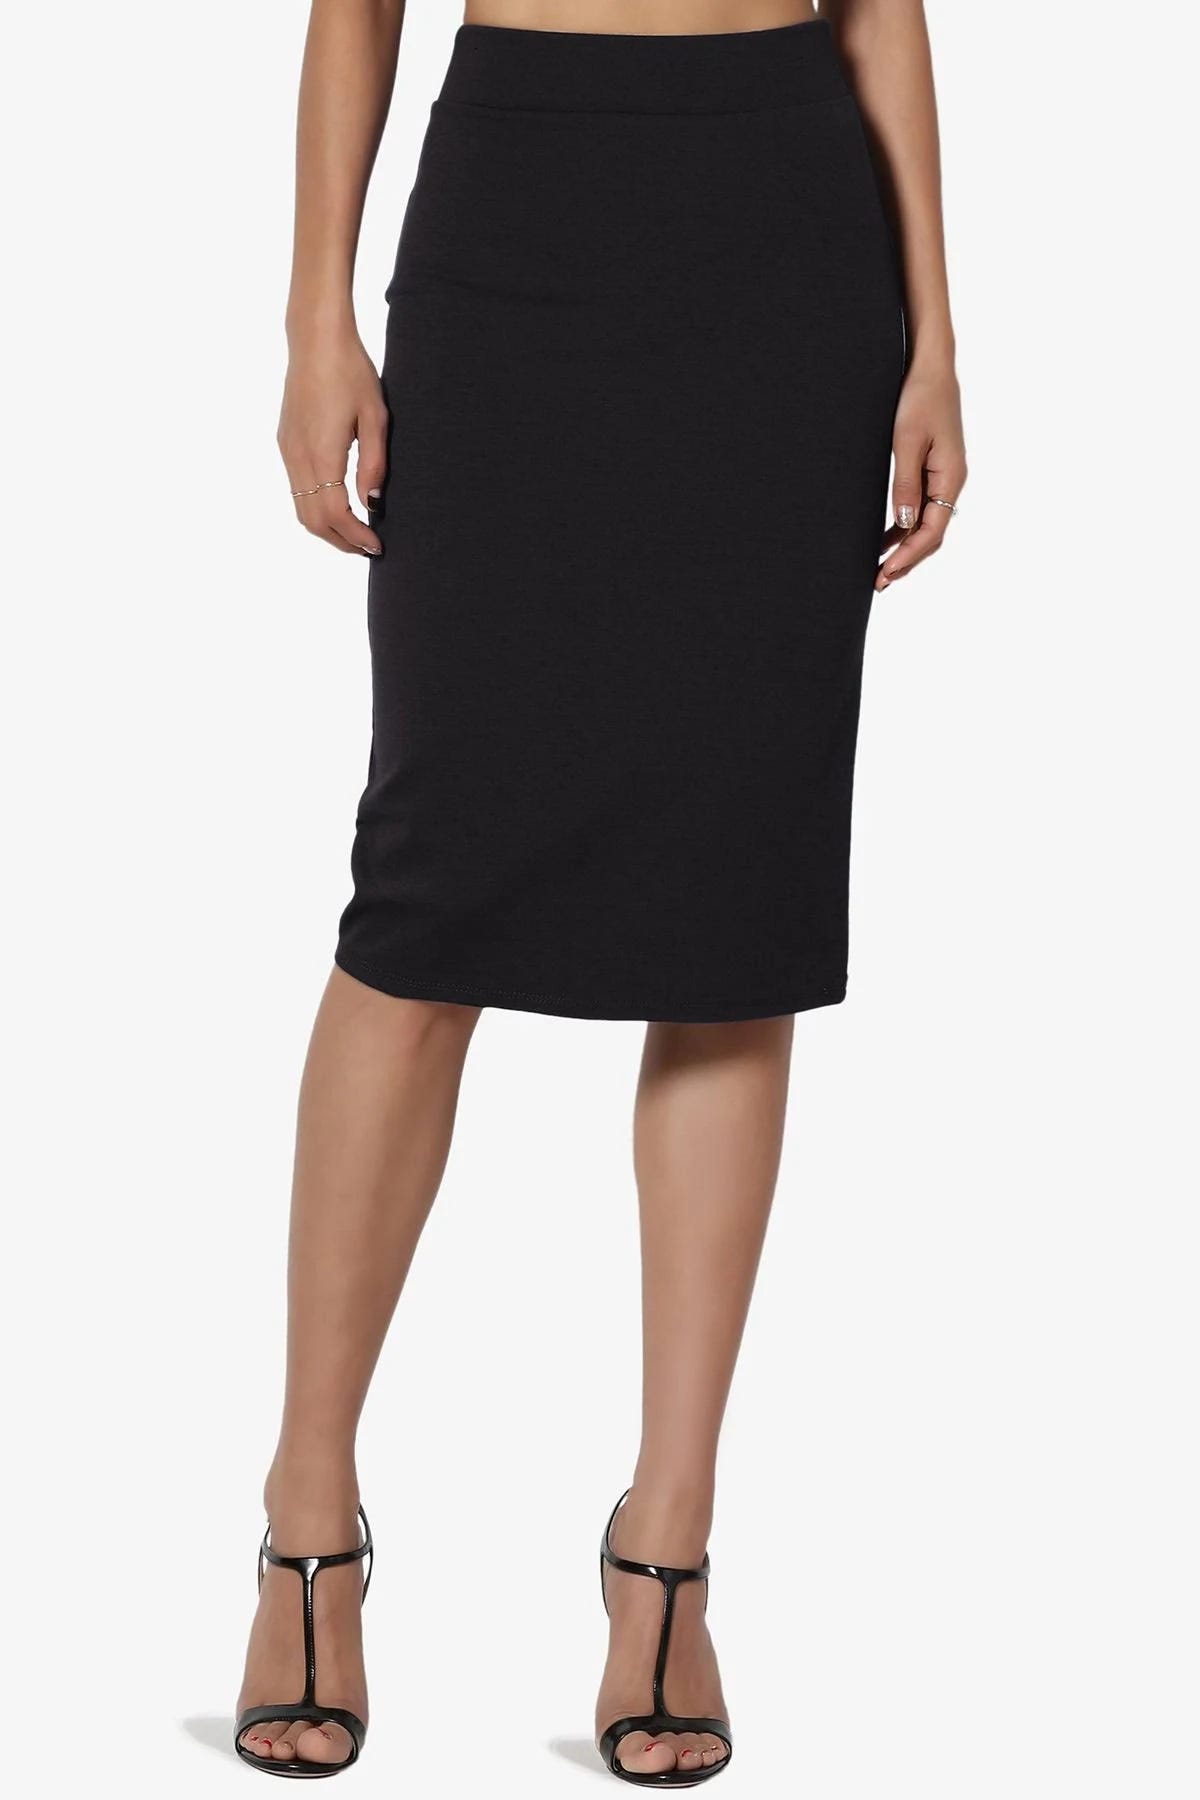 Stylish Black Office Knee Pencil Skirt for Professional Women | Image